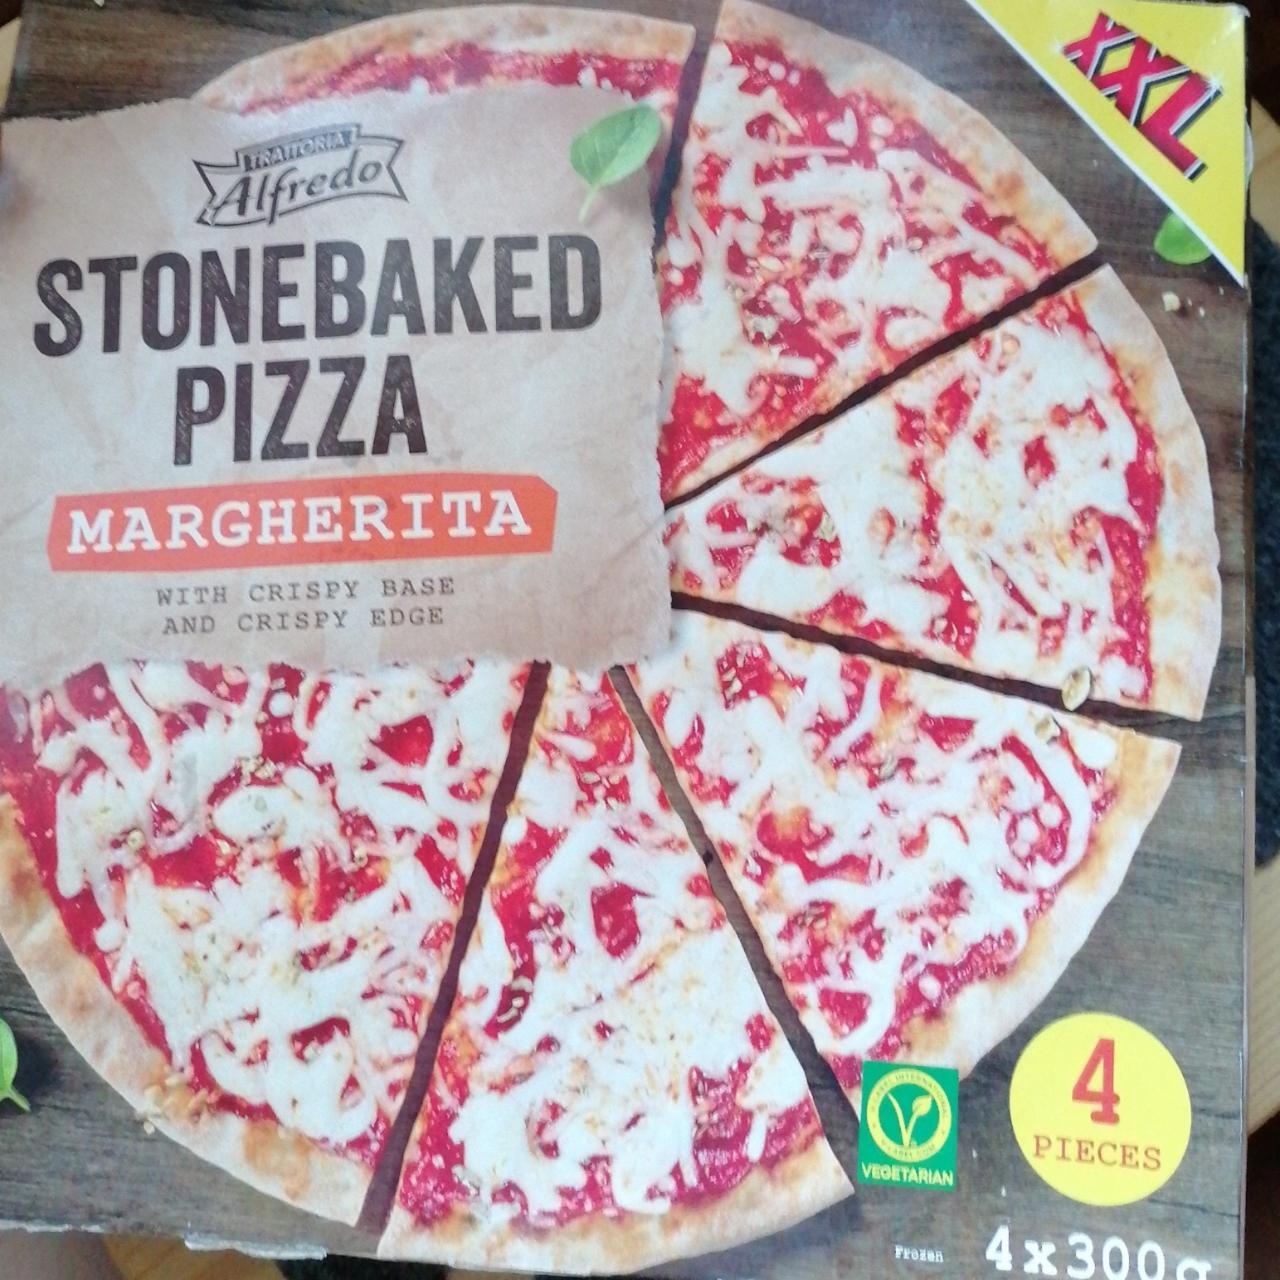 Fotografie - Stonebaked Pizza Margherita with crispy base and crispy edge Trattoria Alfredo